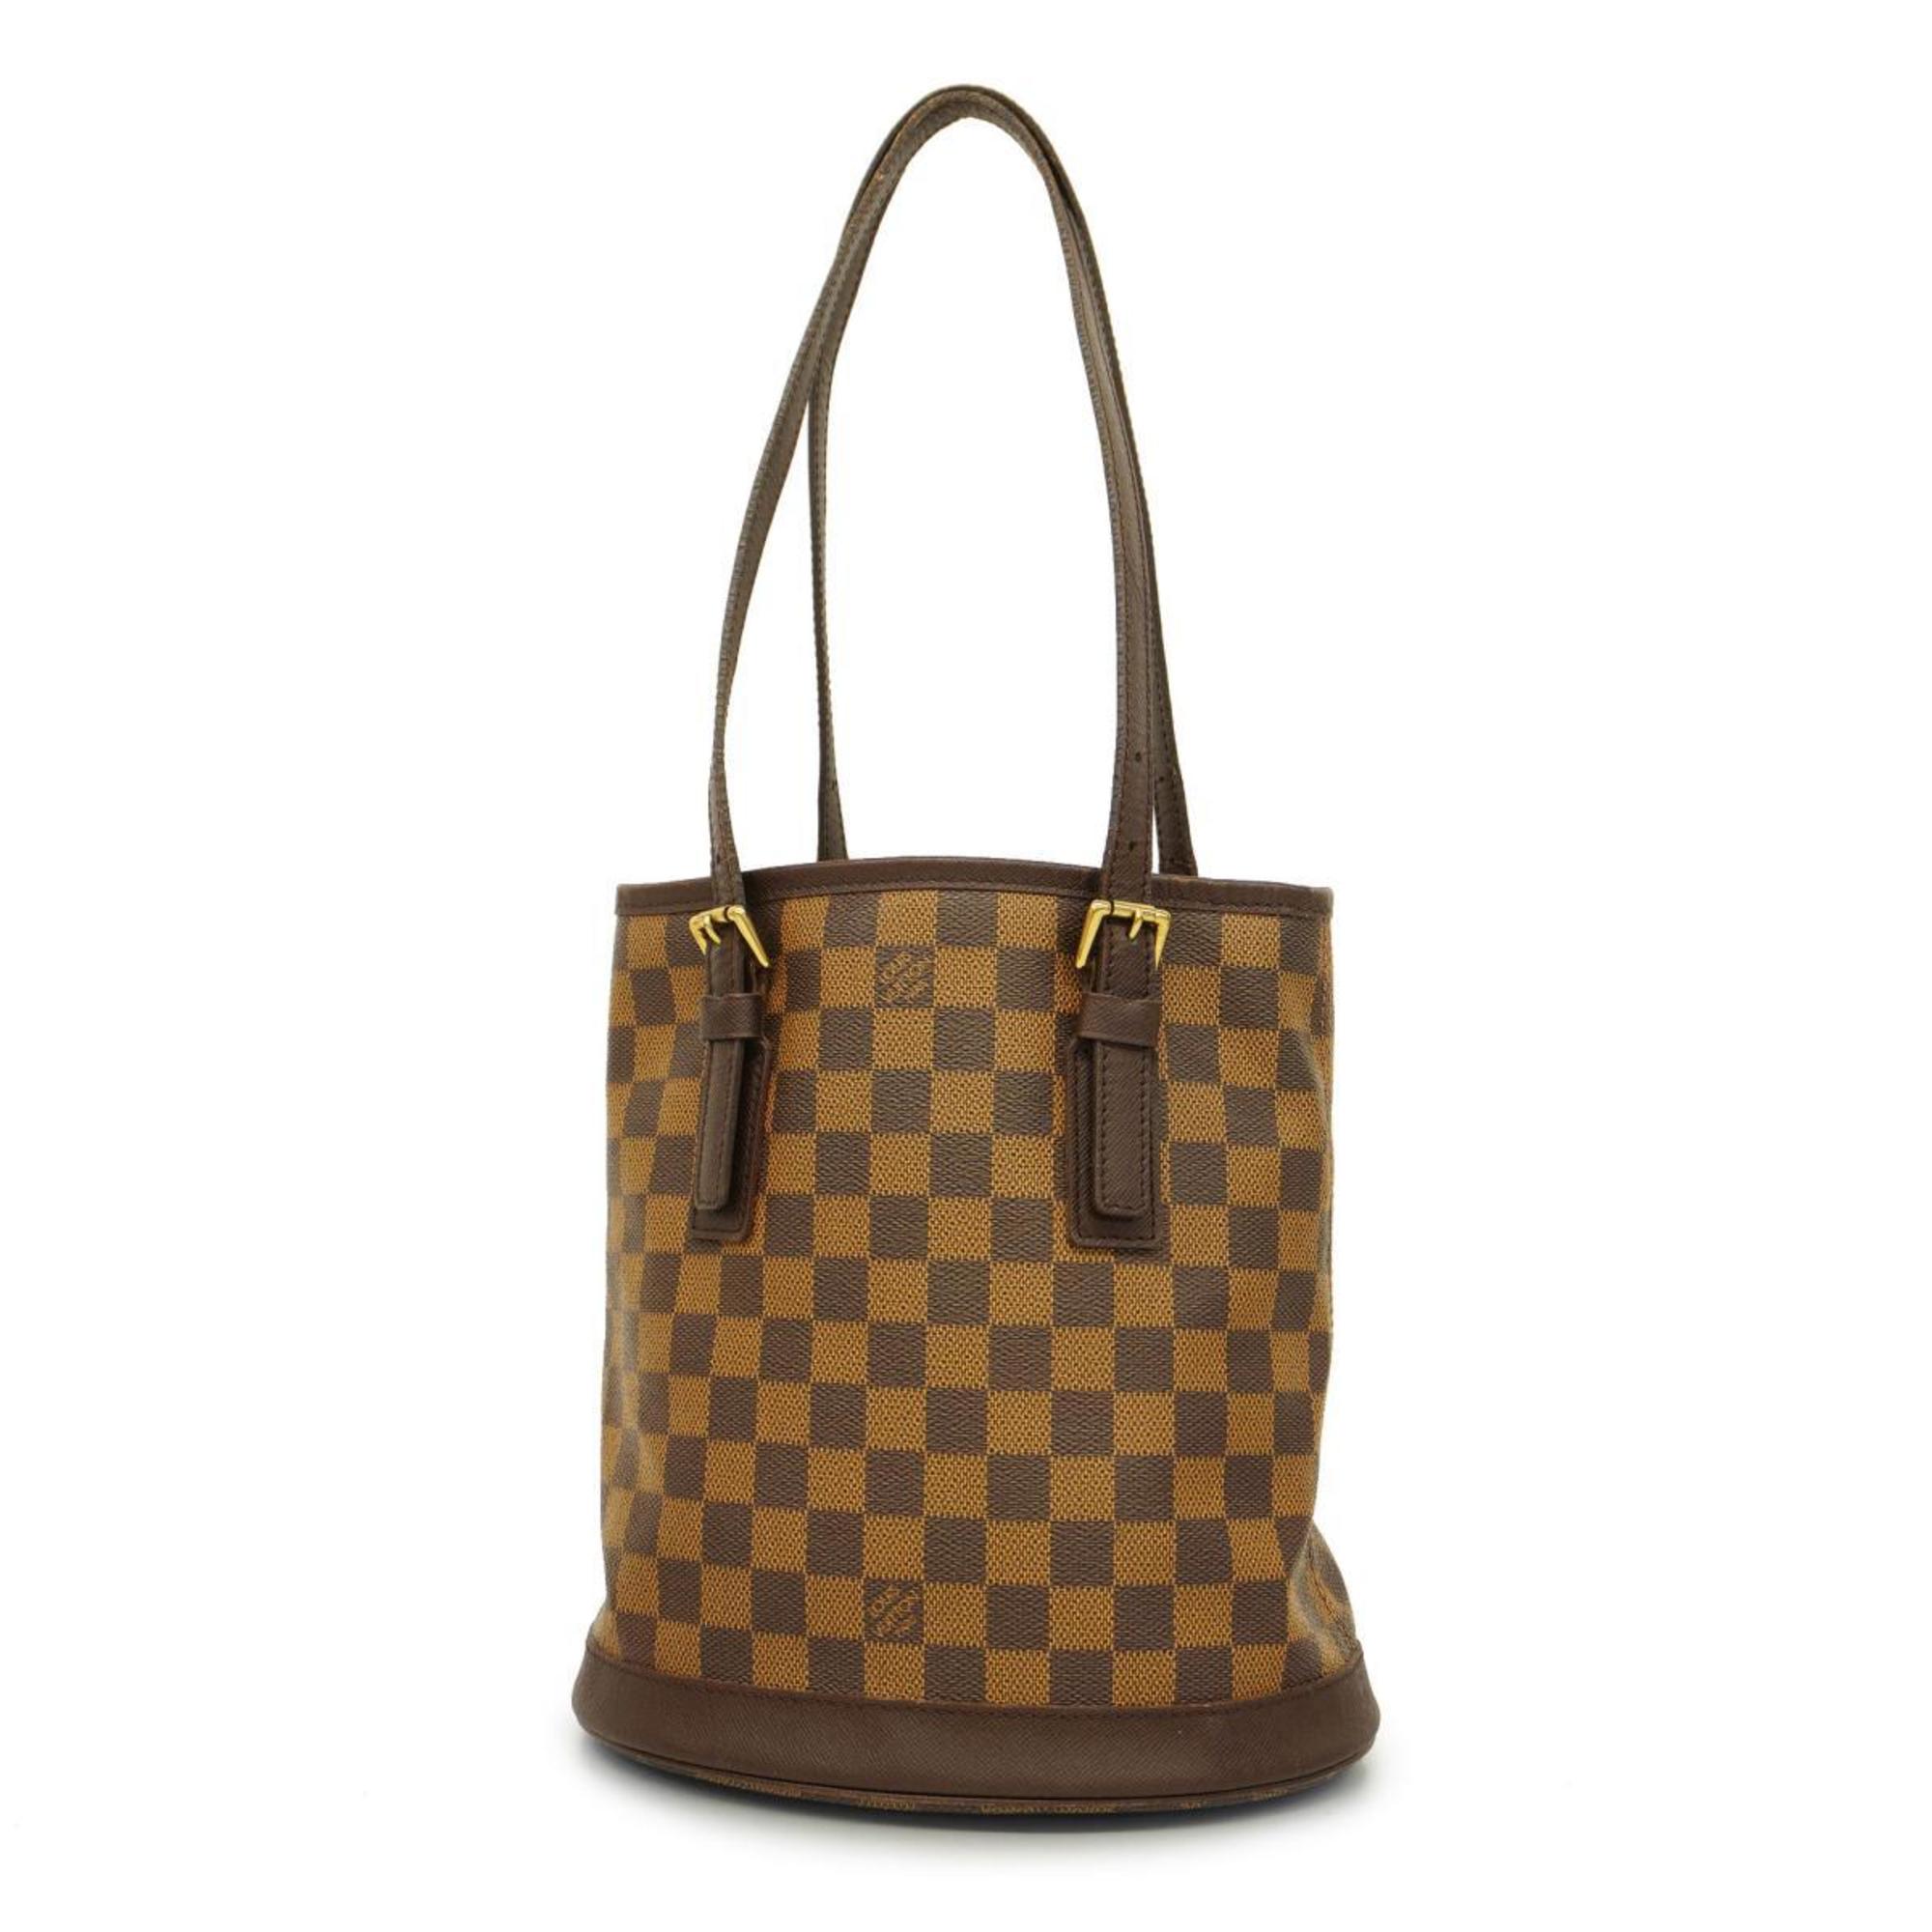 Louis Vuitton Tote Bag Damier Marais N42240 Ebene Ladies